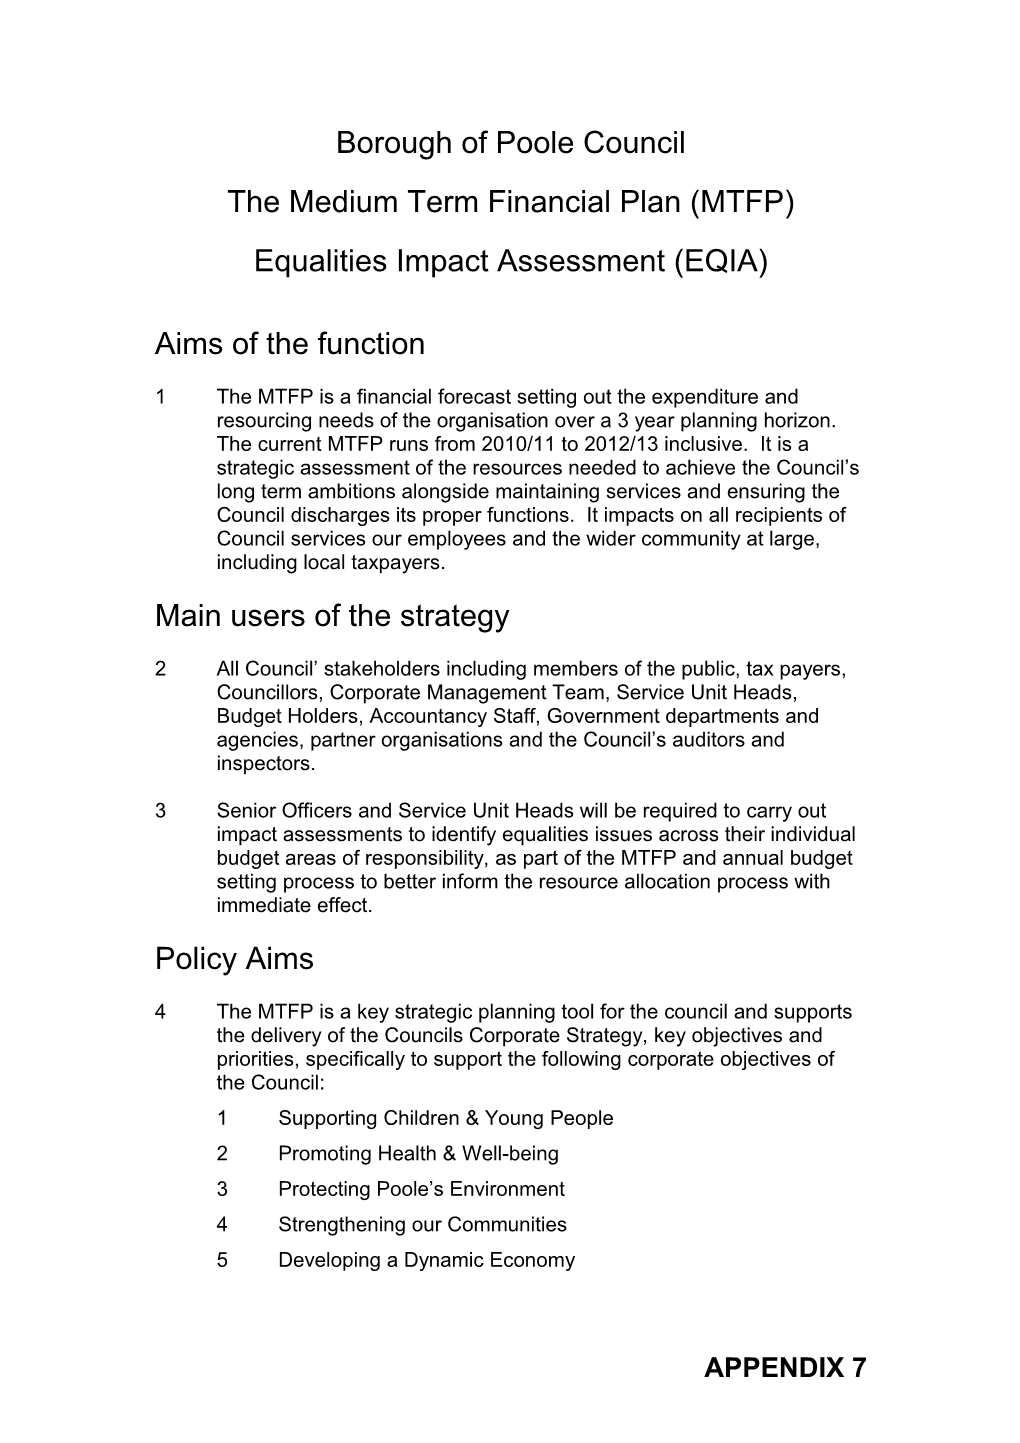 MEDIUM TERM FINANCIAL PLAN 2010/11 2012/13 - Appendix 7 Equalities Impact Assessment